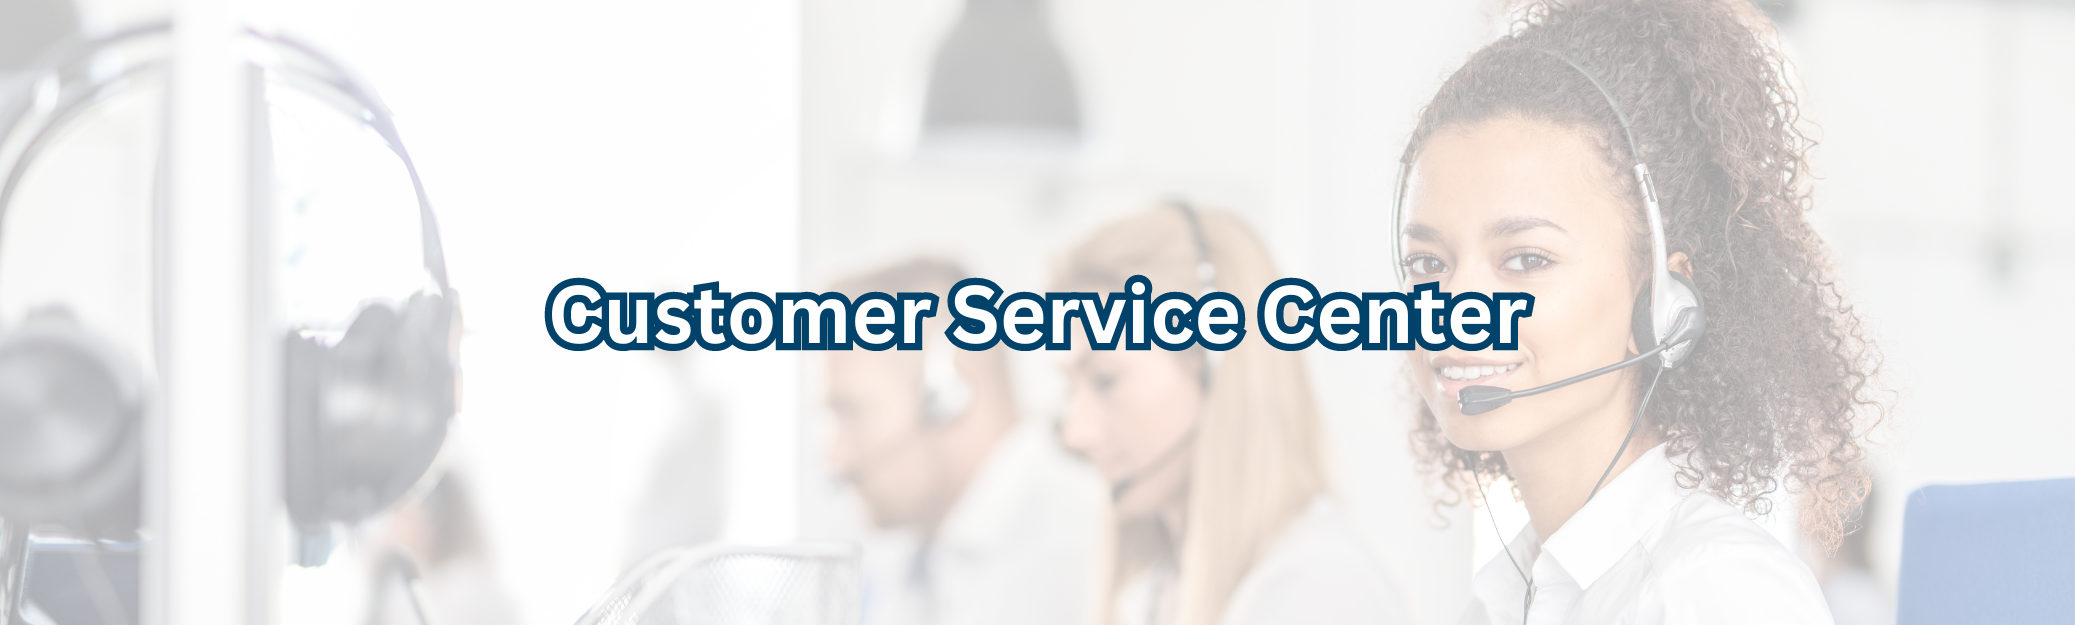 Customer Service Center Banner